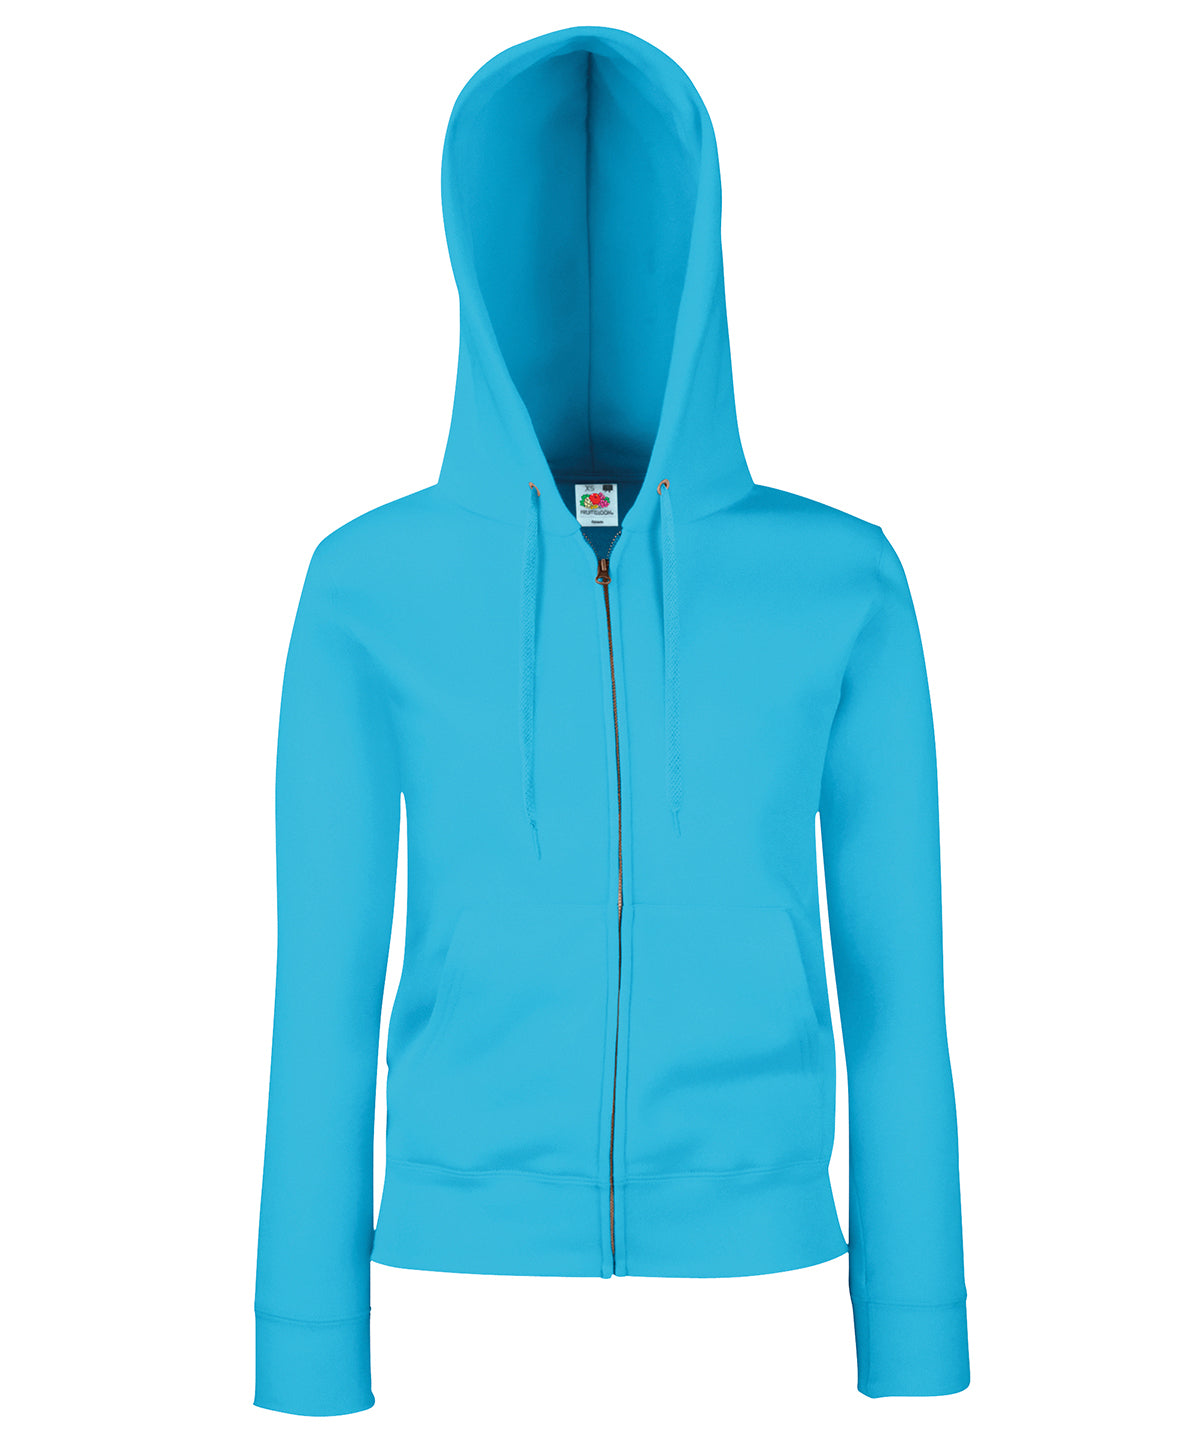 Hettupeysur - Women's Premium 70/30 Hooded Sweatshirt Jacket